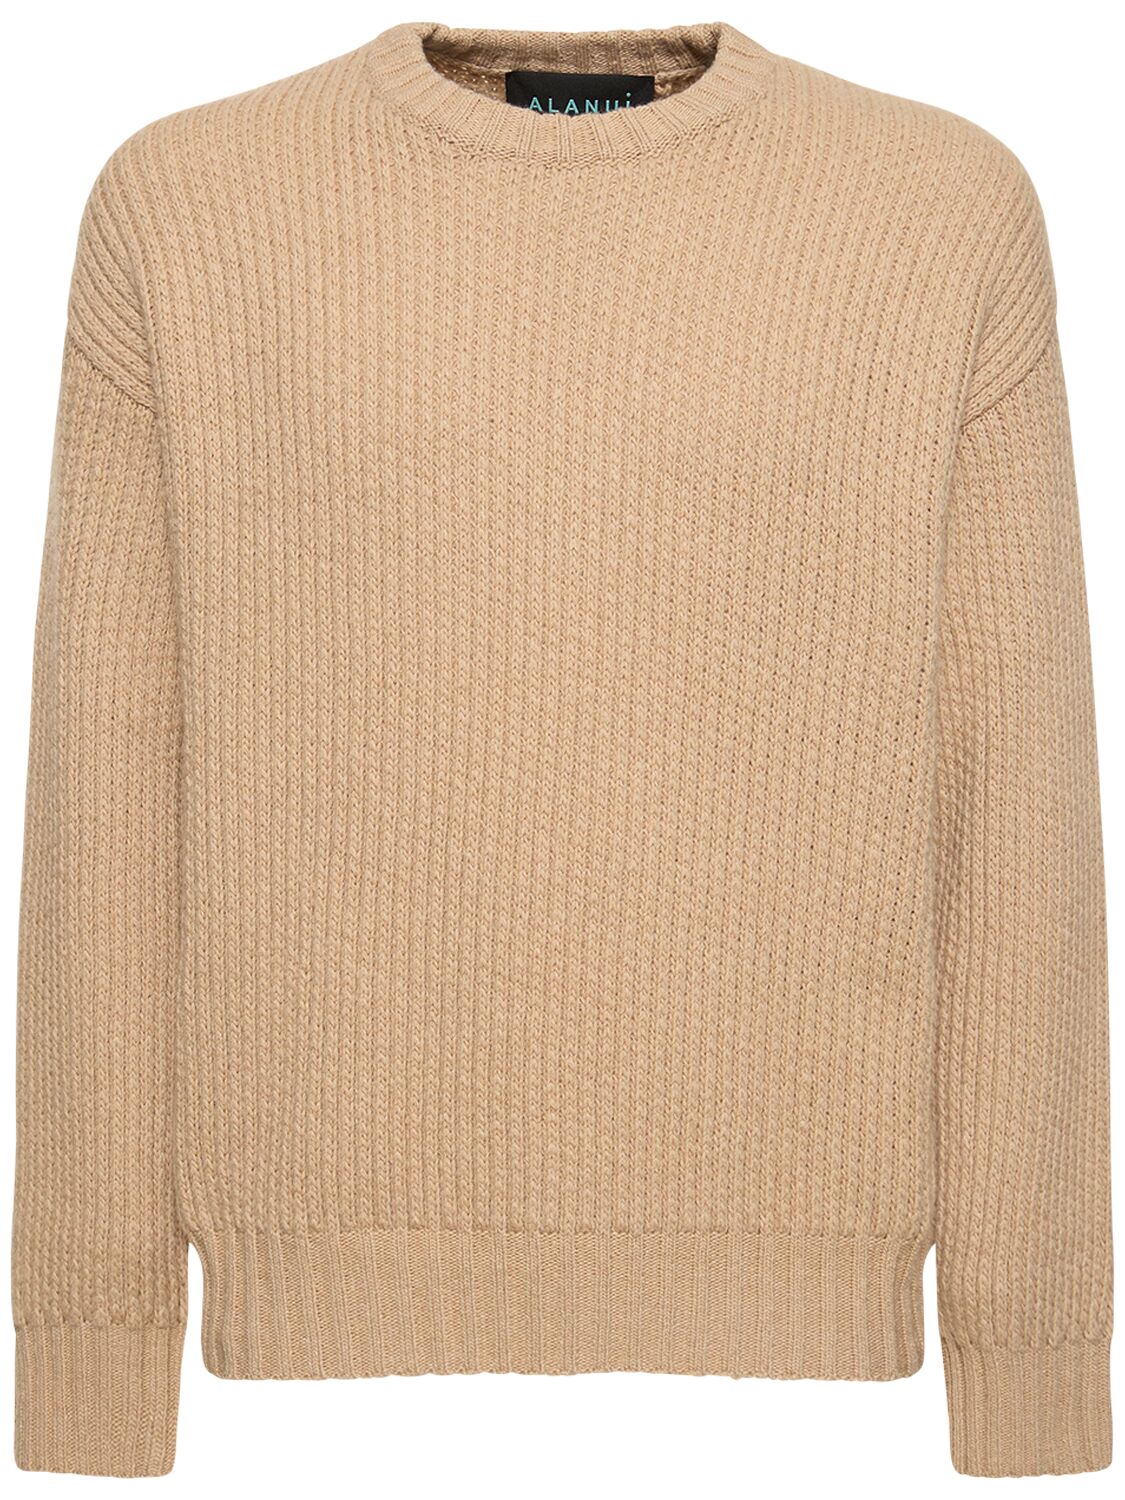 Alanui Cashmere & Cotton Knit Sweater In Beige